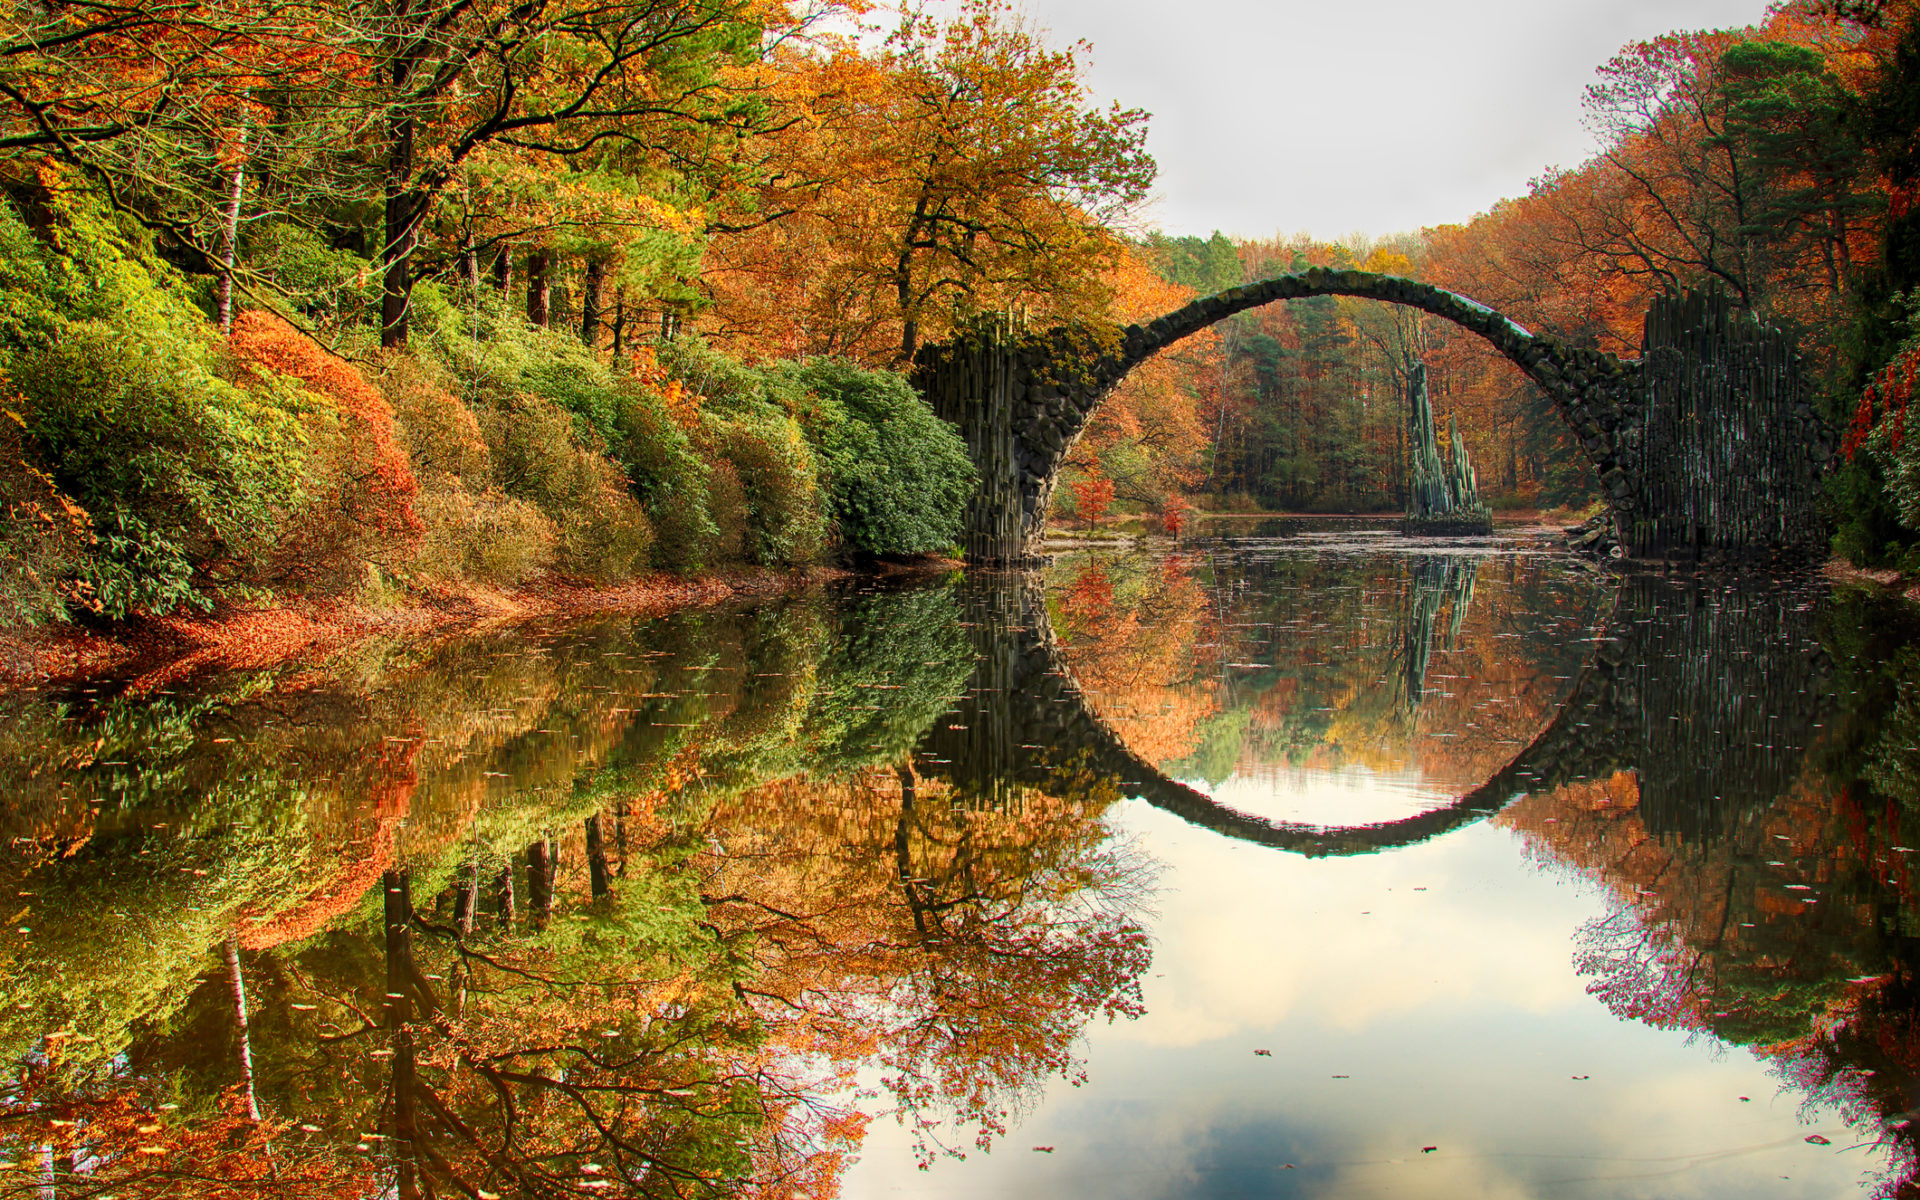 man made, devil's bridge, bridge, fall, forest, germany, nature, reflection, river